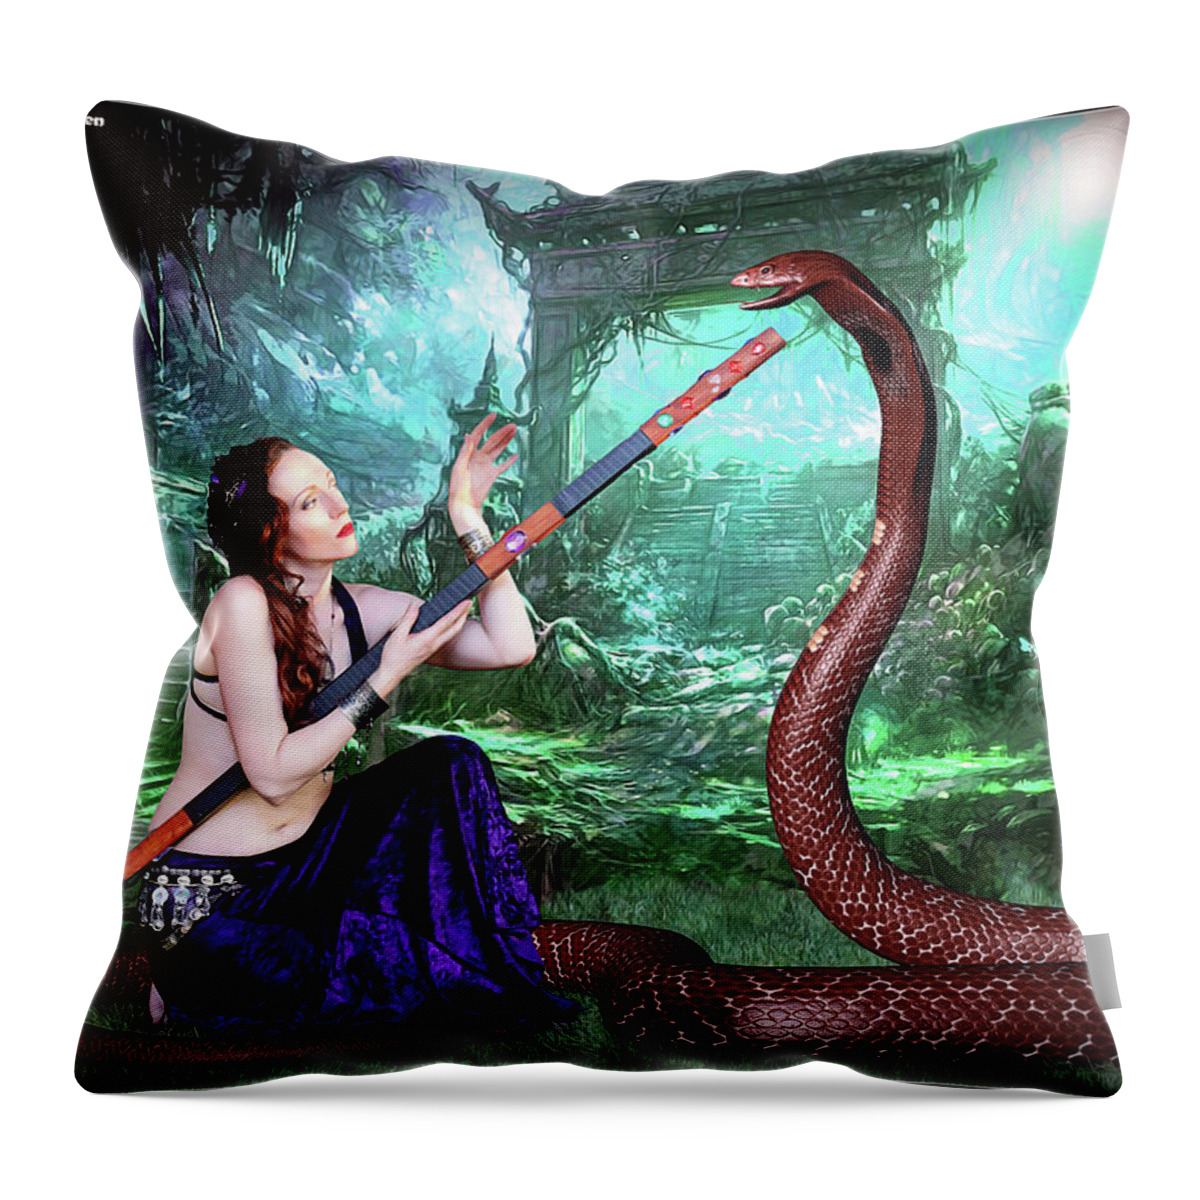  Sorceress Throw Pillow featuring the photograph Snake Charmer by Jon Volden